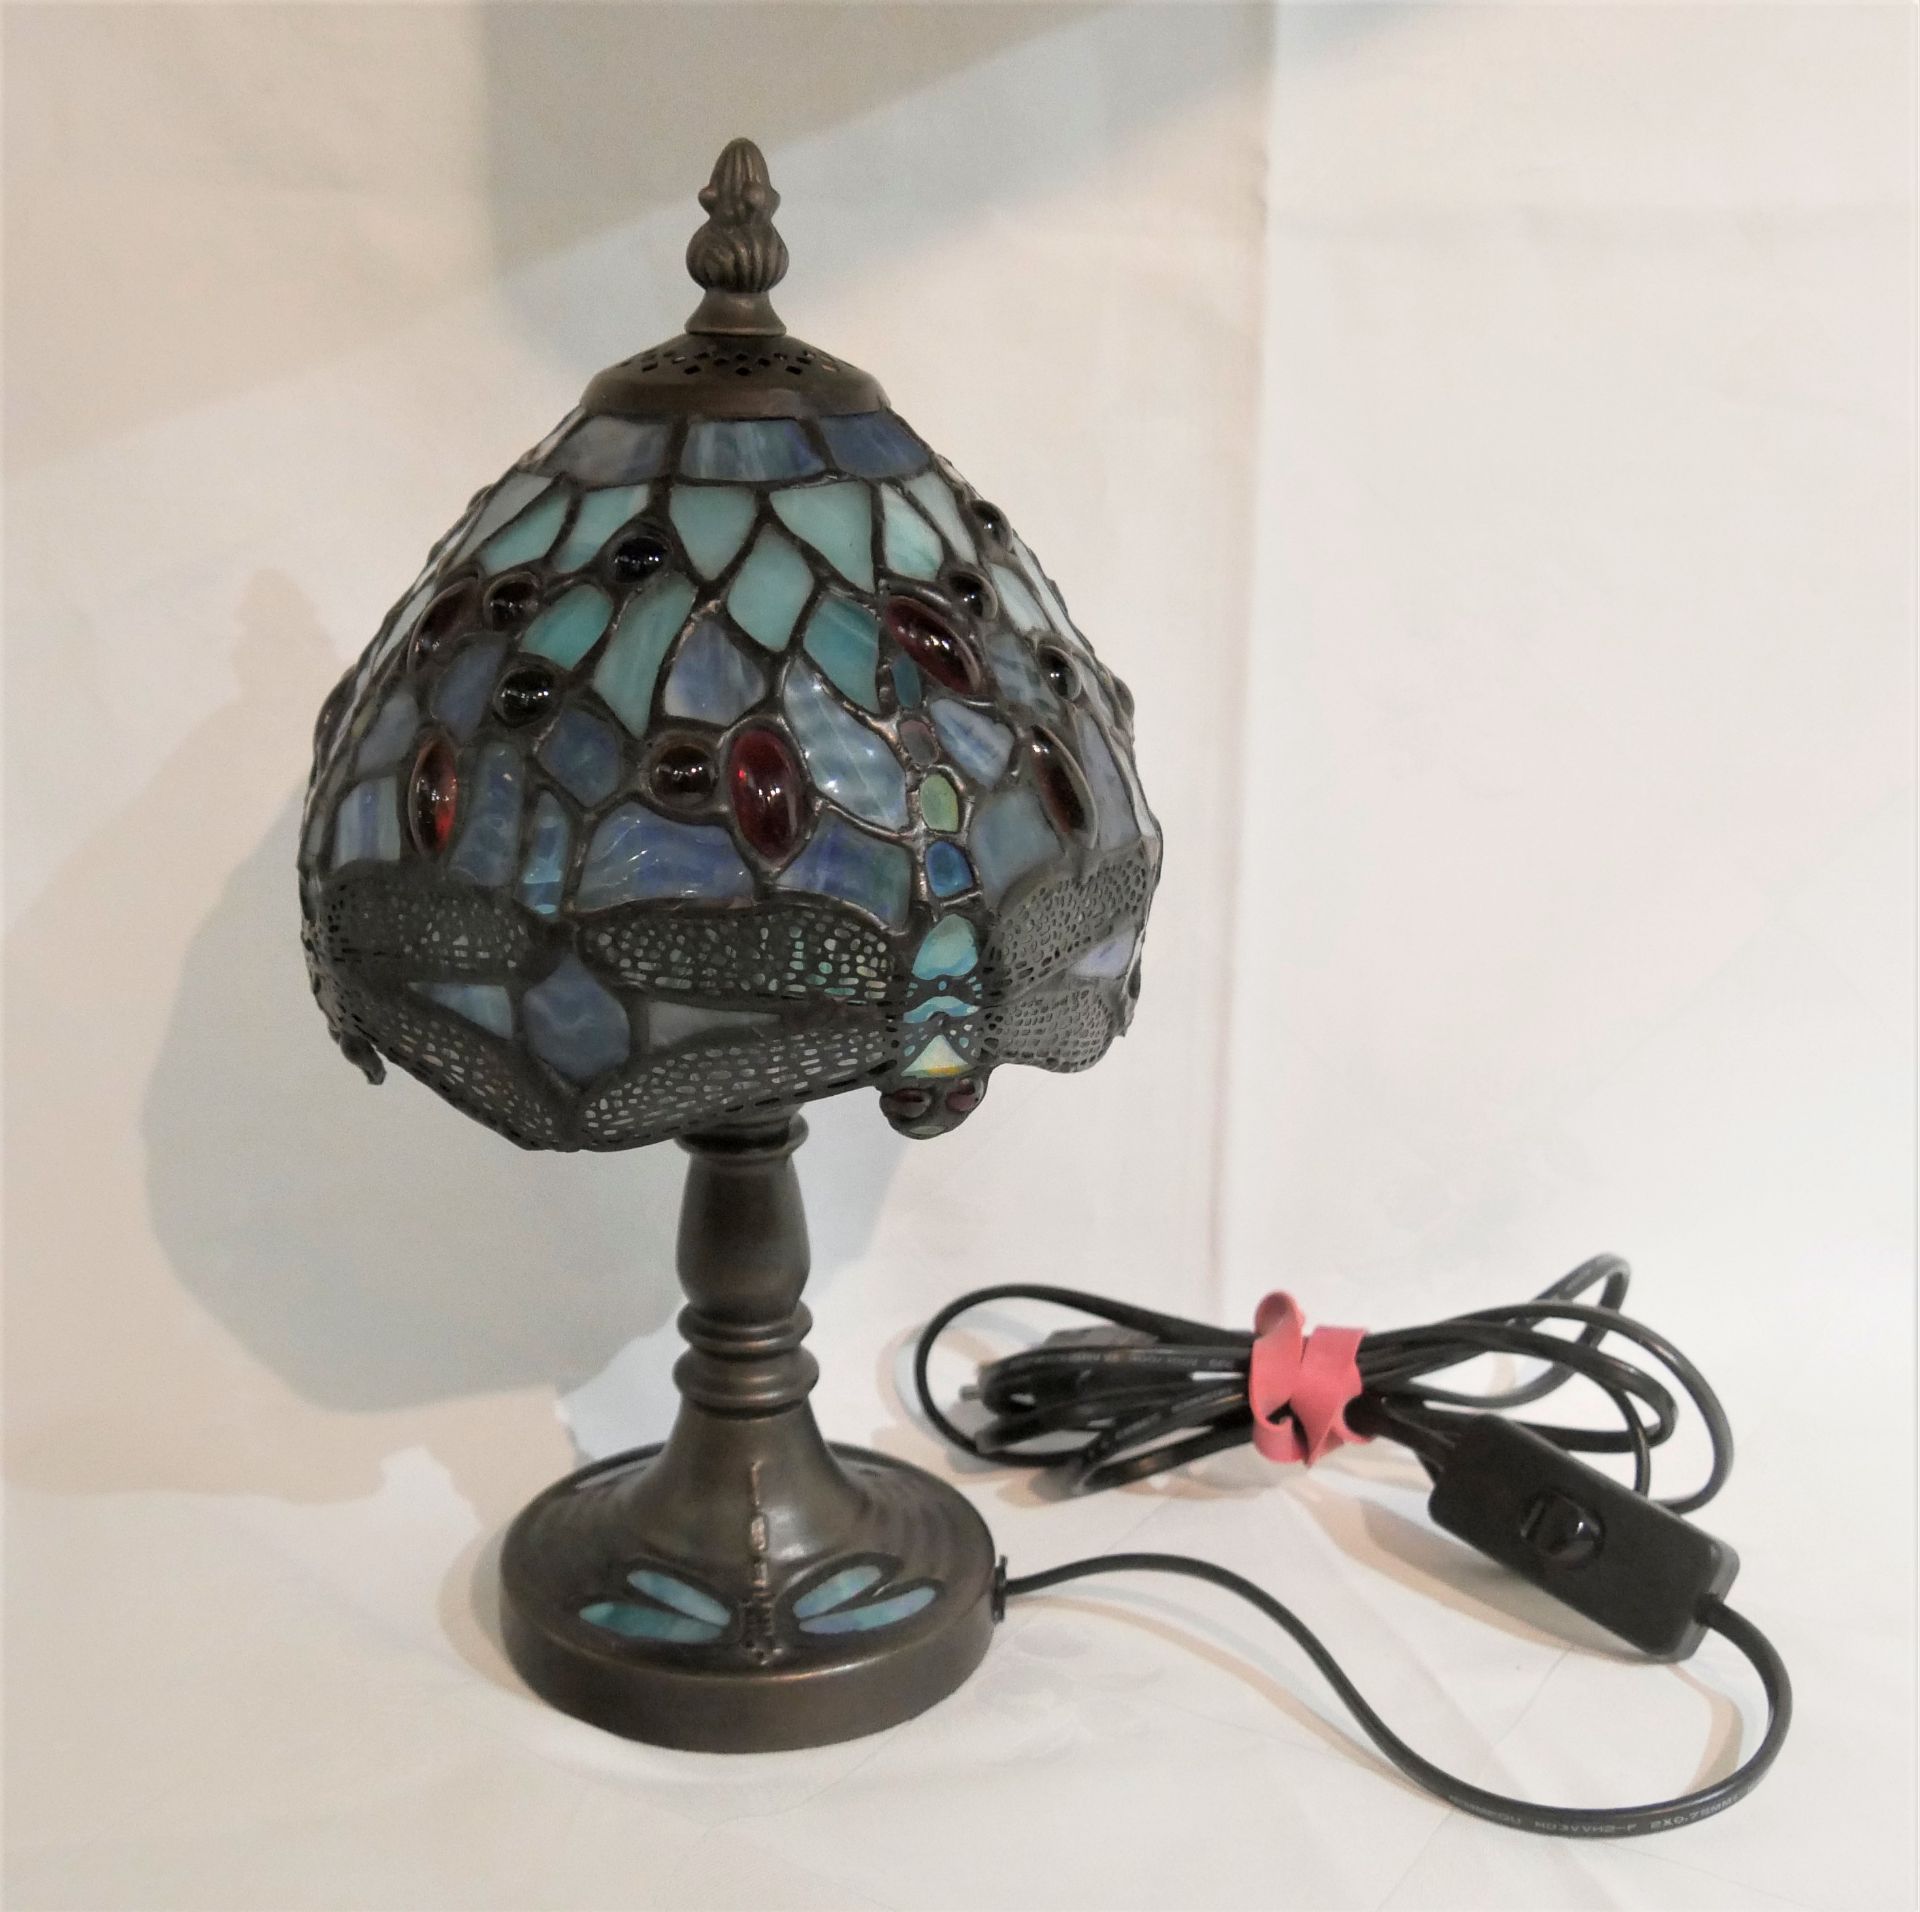 Tischlampe im Tiffany Stil "Libellenlampe". Höhe ca. 28,5 cm